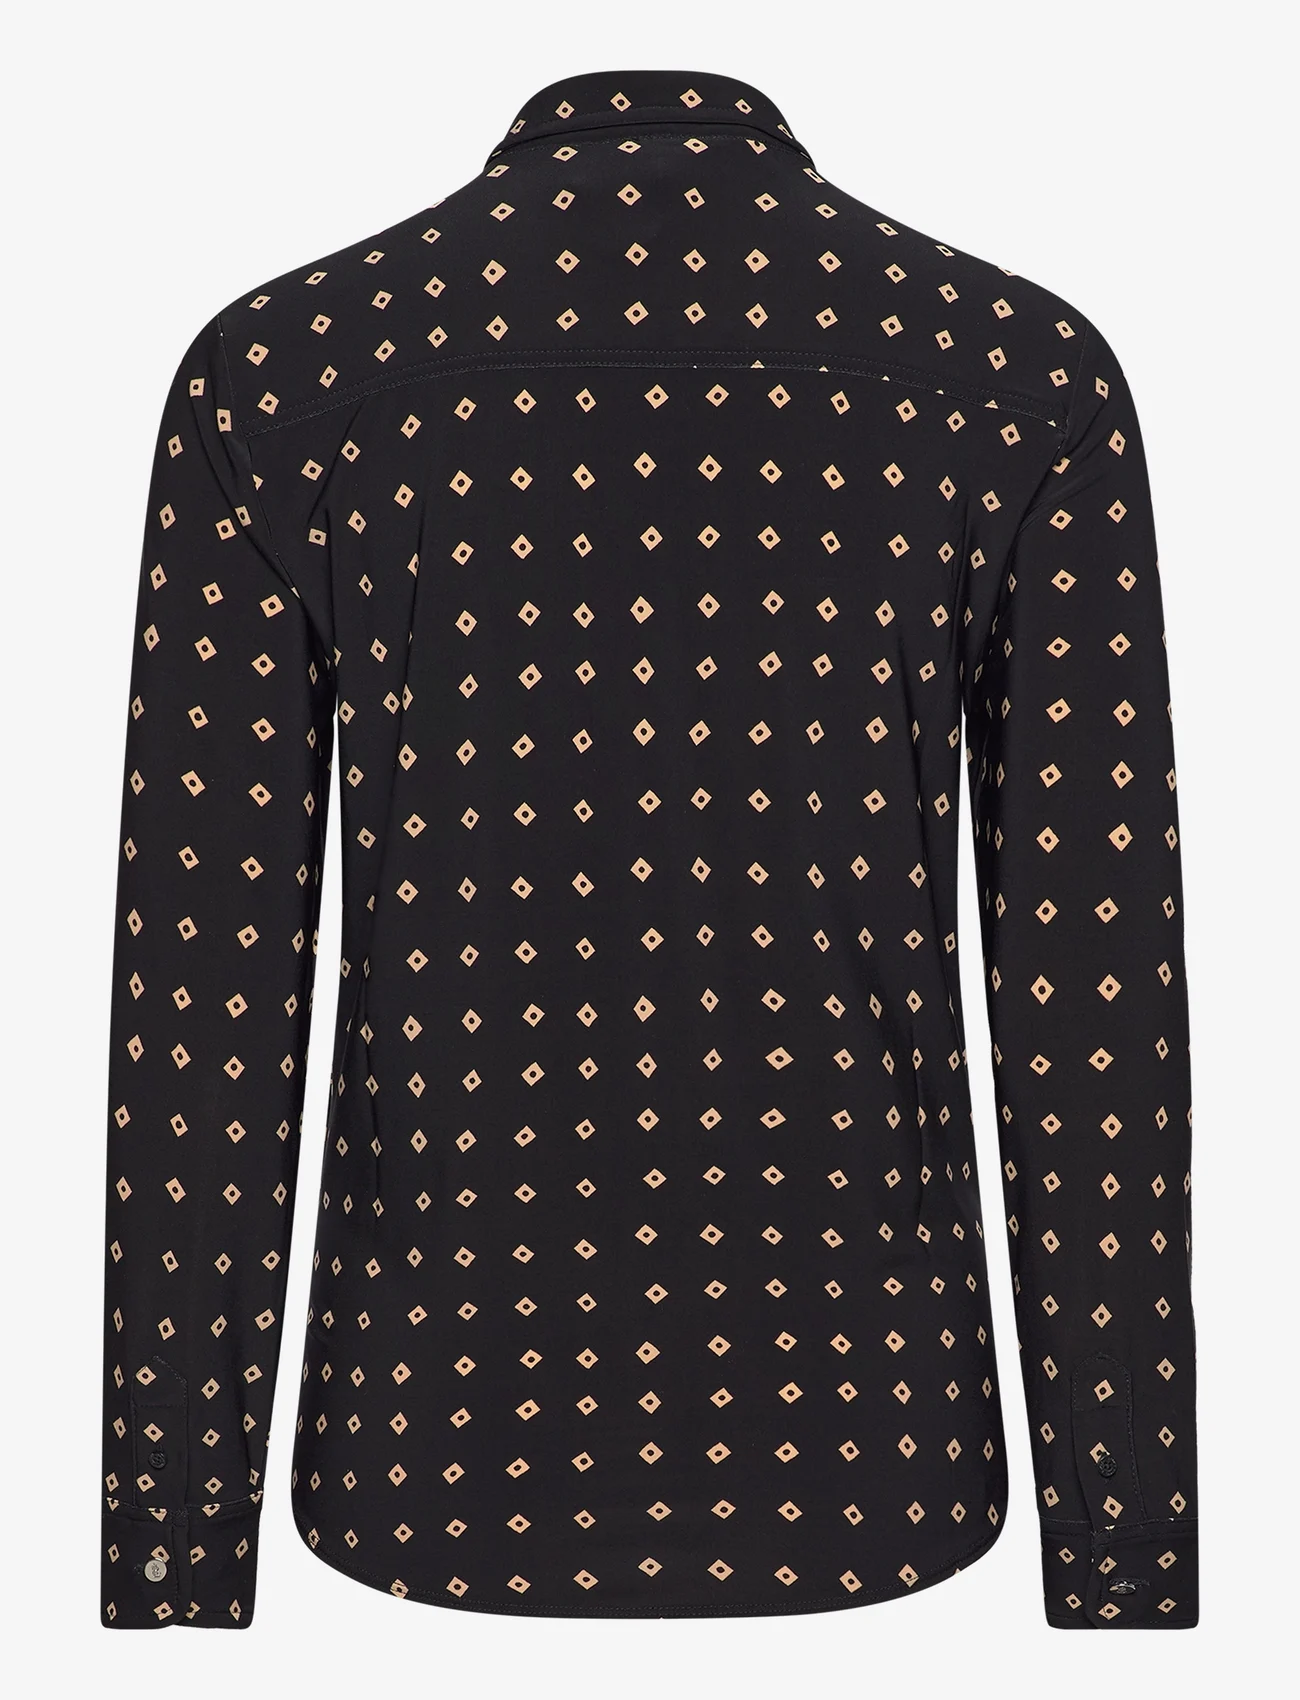 Lauren Ralph Lauren - Geo-Print Stretch Jersey Shirt - denimskjorter - black/tan - 1